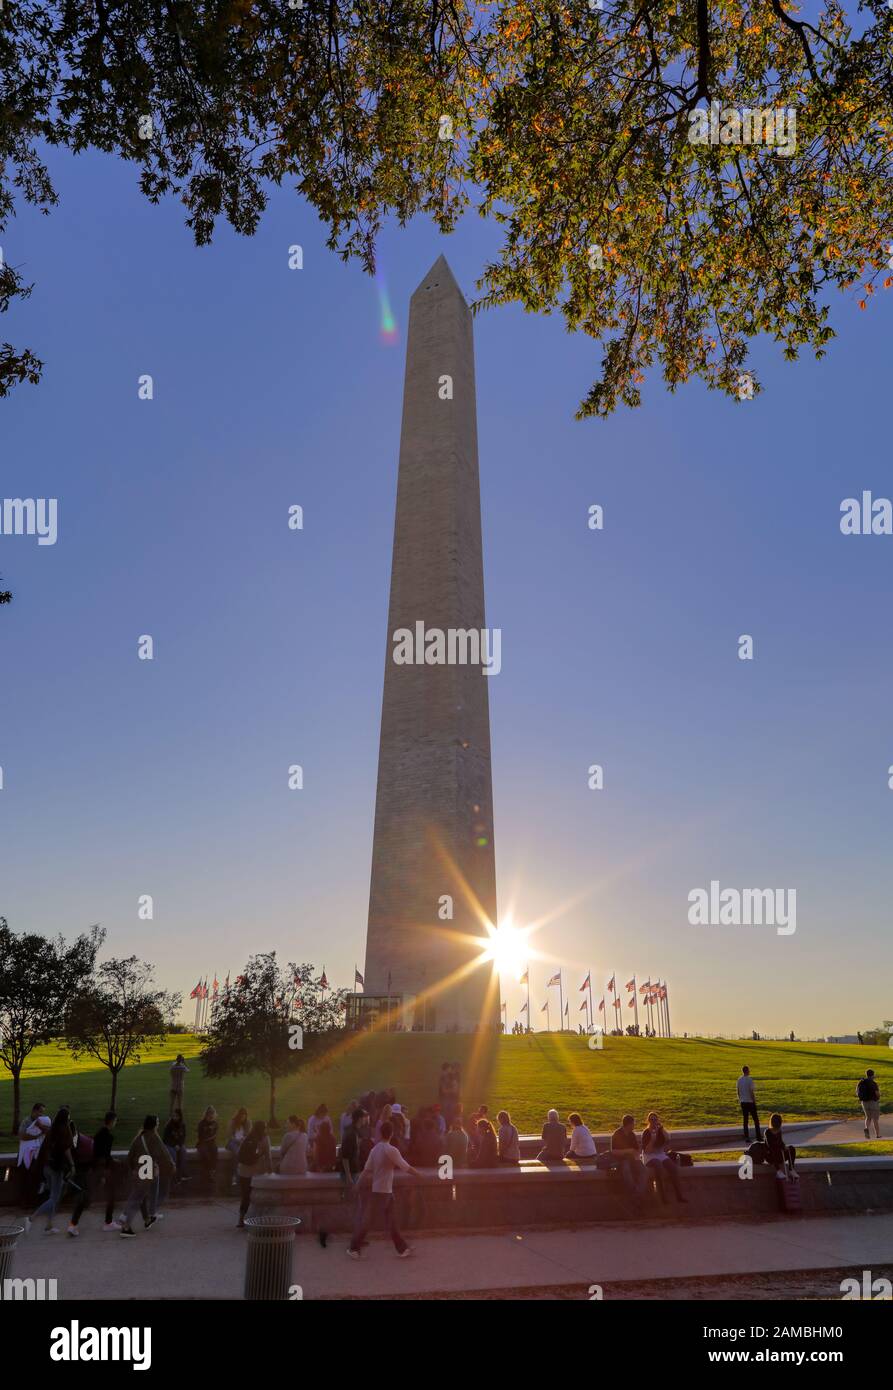 Washington D.C. - October 27, 2019 - The Washington Monument on the National Mall in Washington, DC on a fall evening. Stock Photo